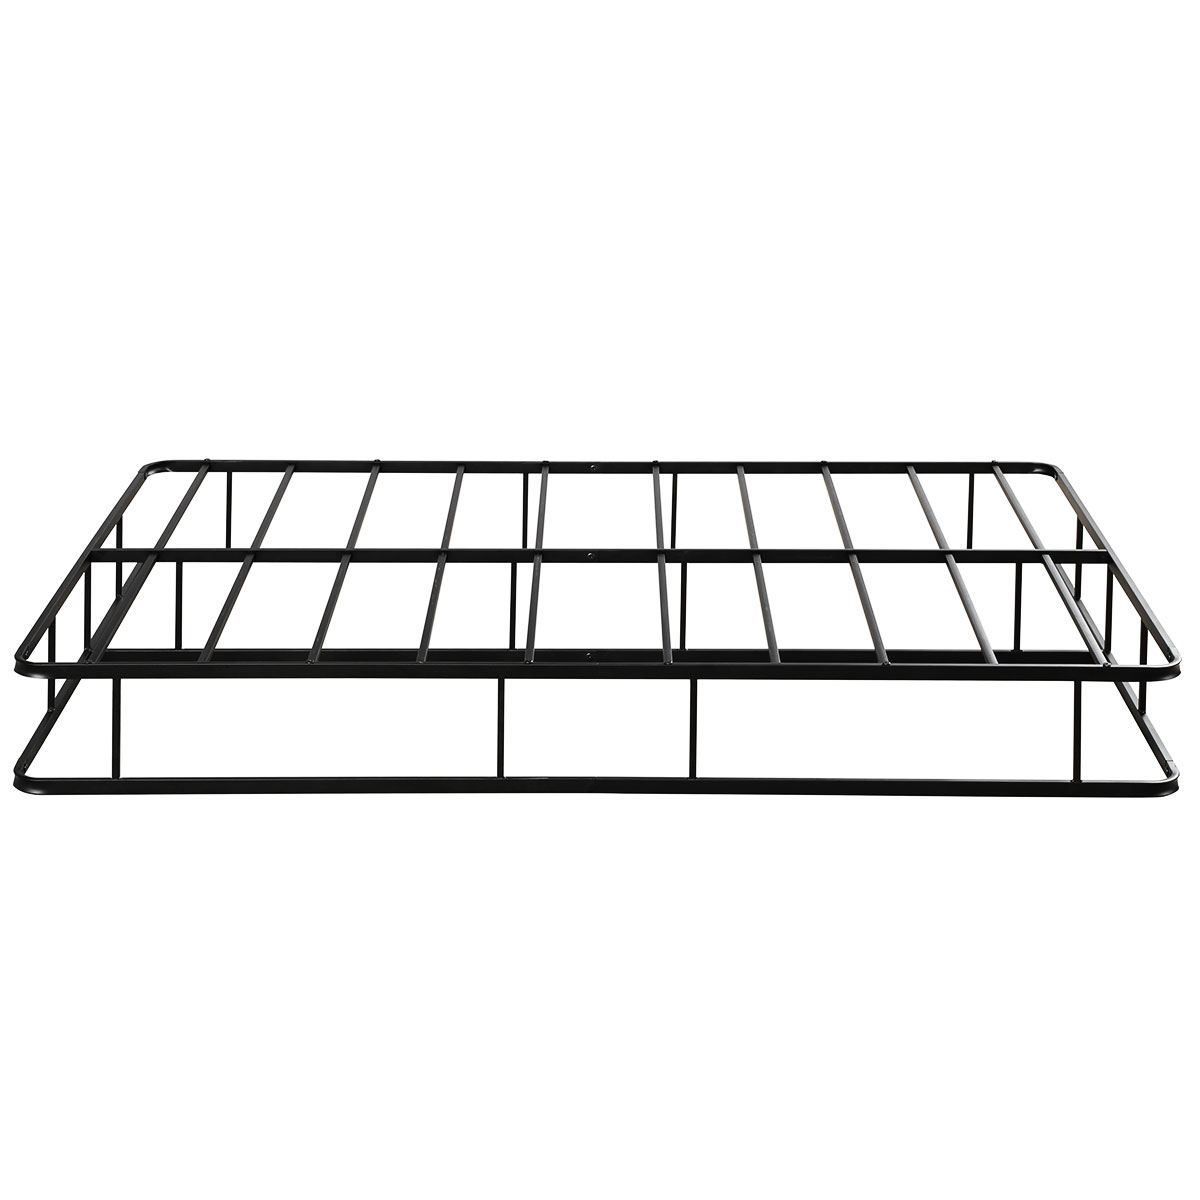 Topbuy Full Size Bed Frame Steel Slat Mattress - image 2 of 9